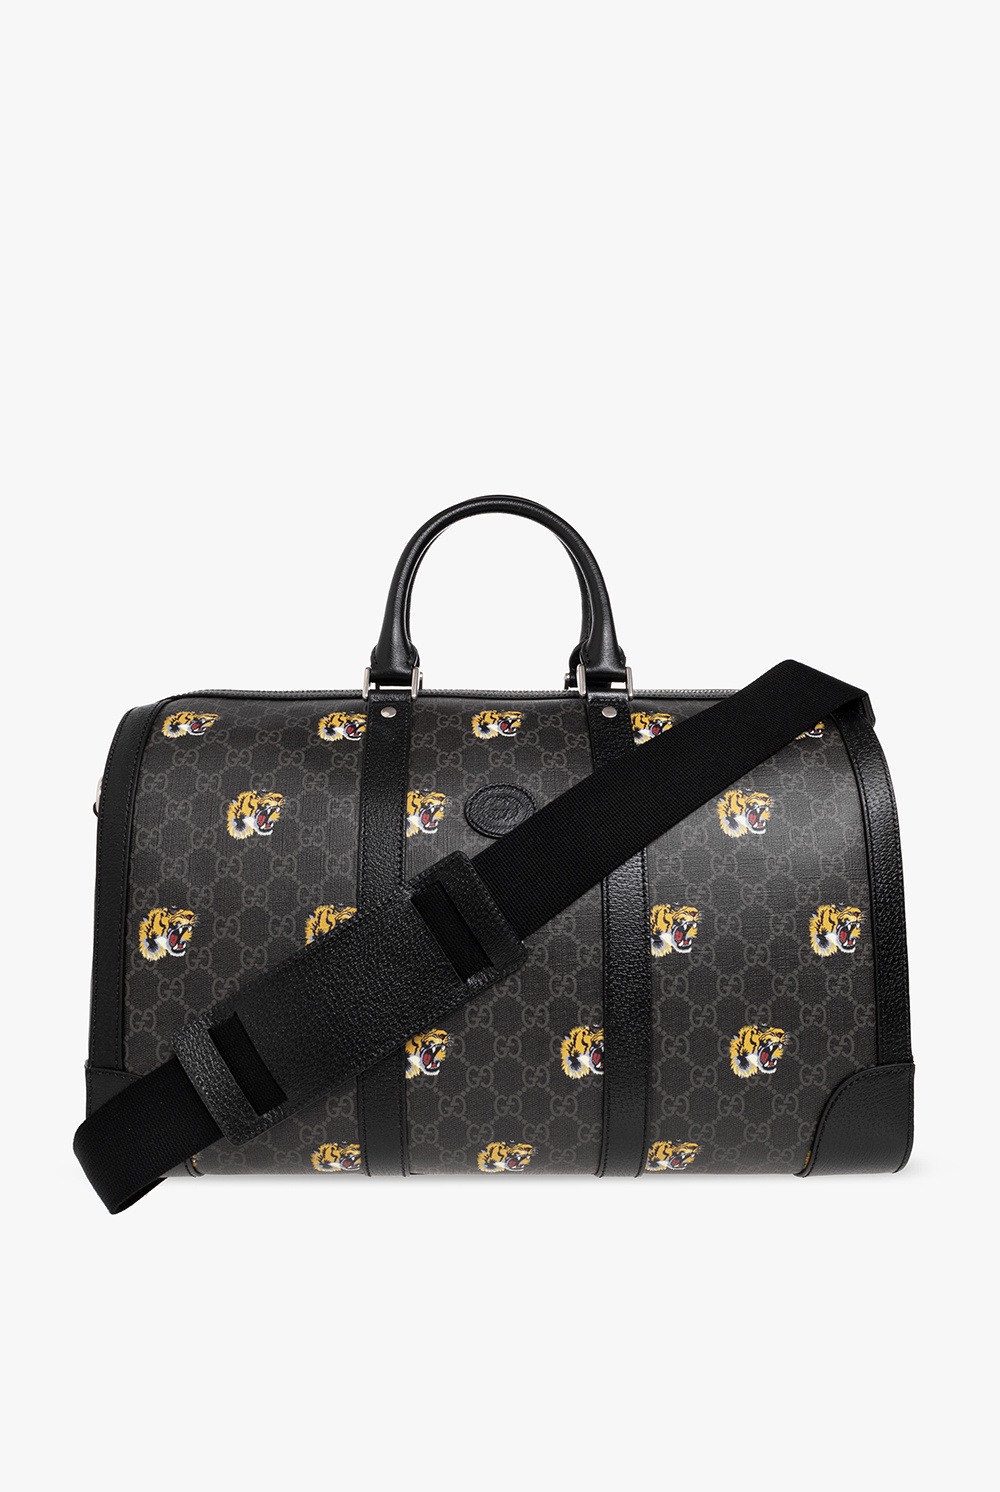 Gucci ‘Bestiary Medium’ holdall bag